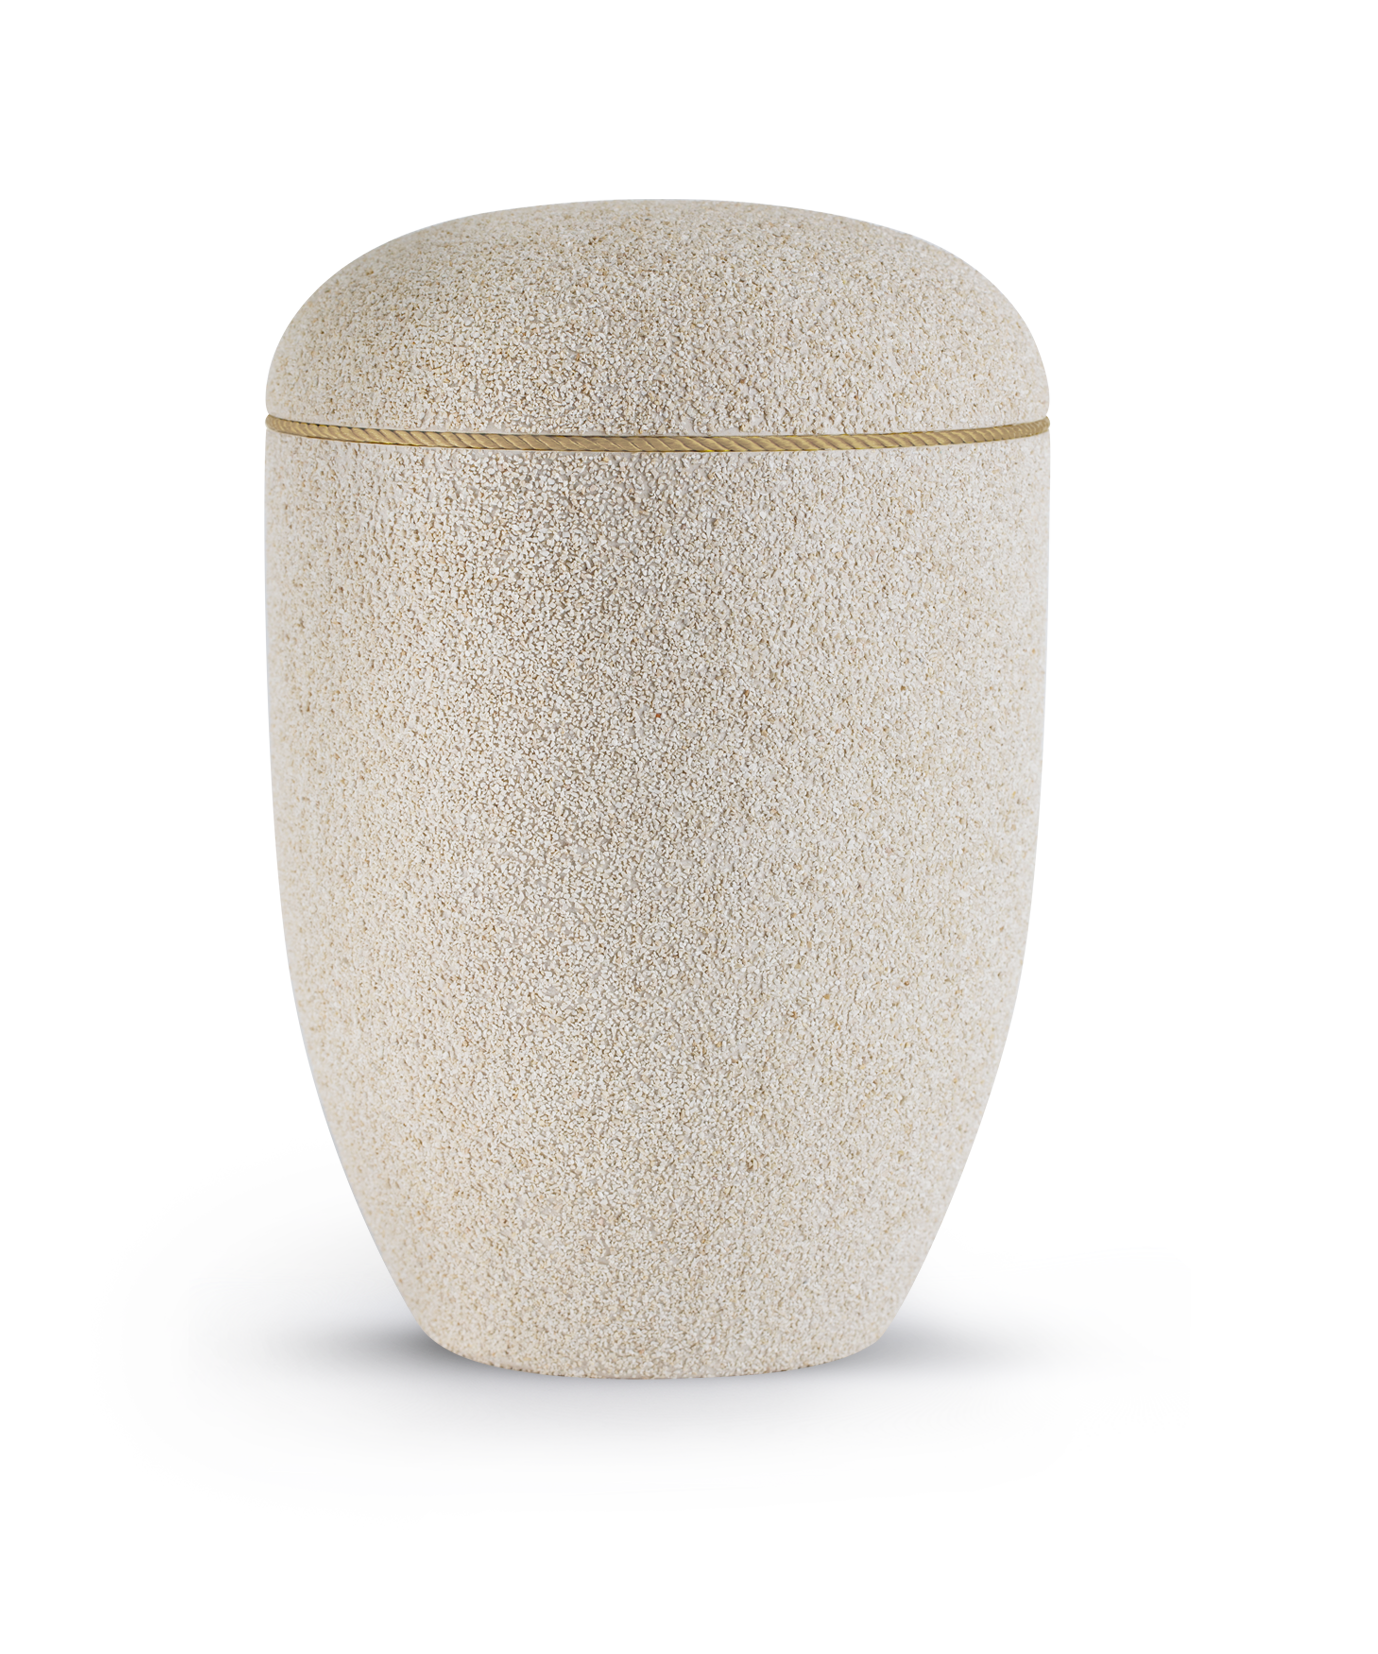 Völsing urn Edition Sorra coated with sand